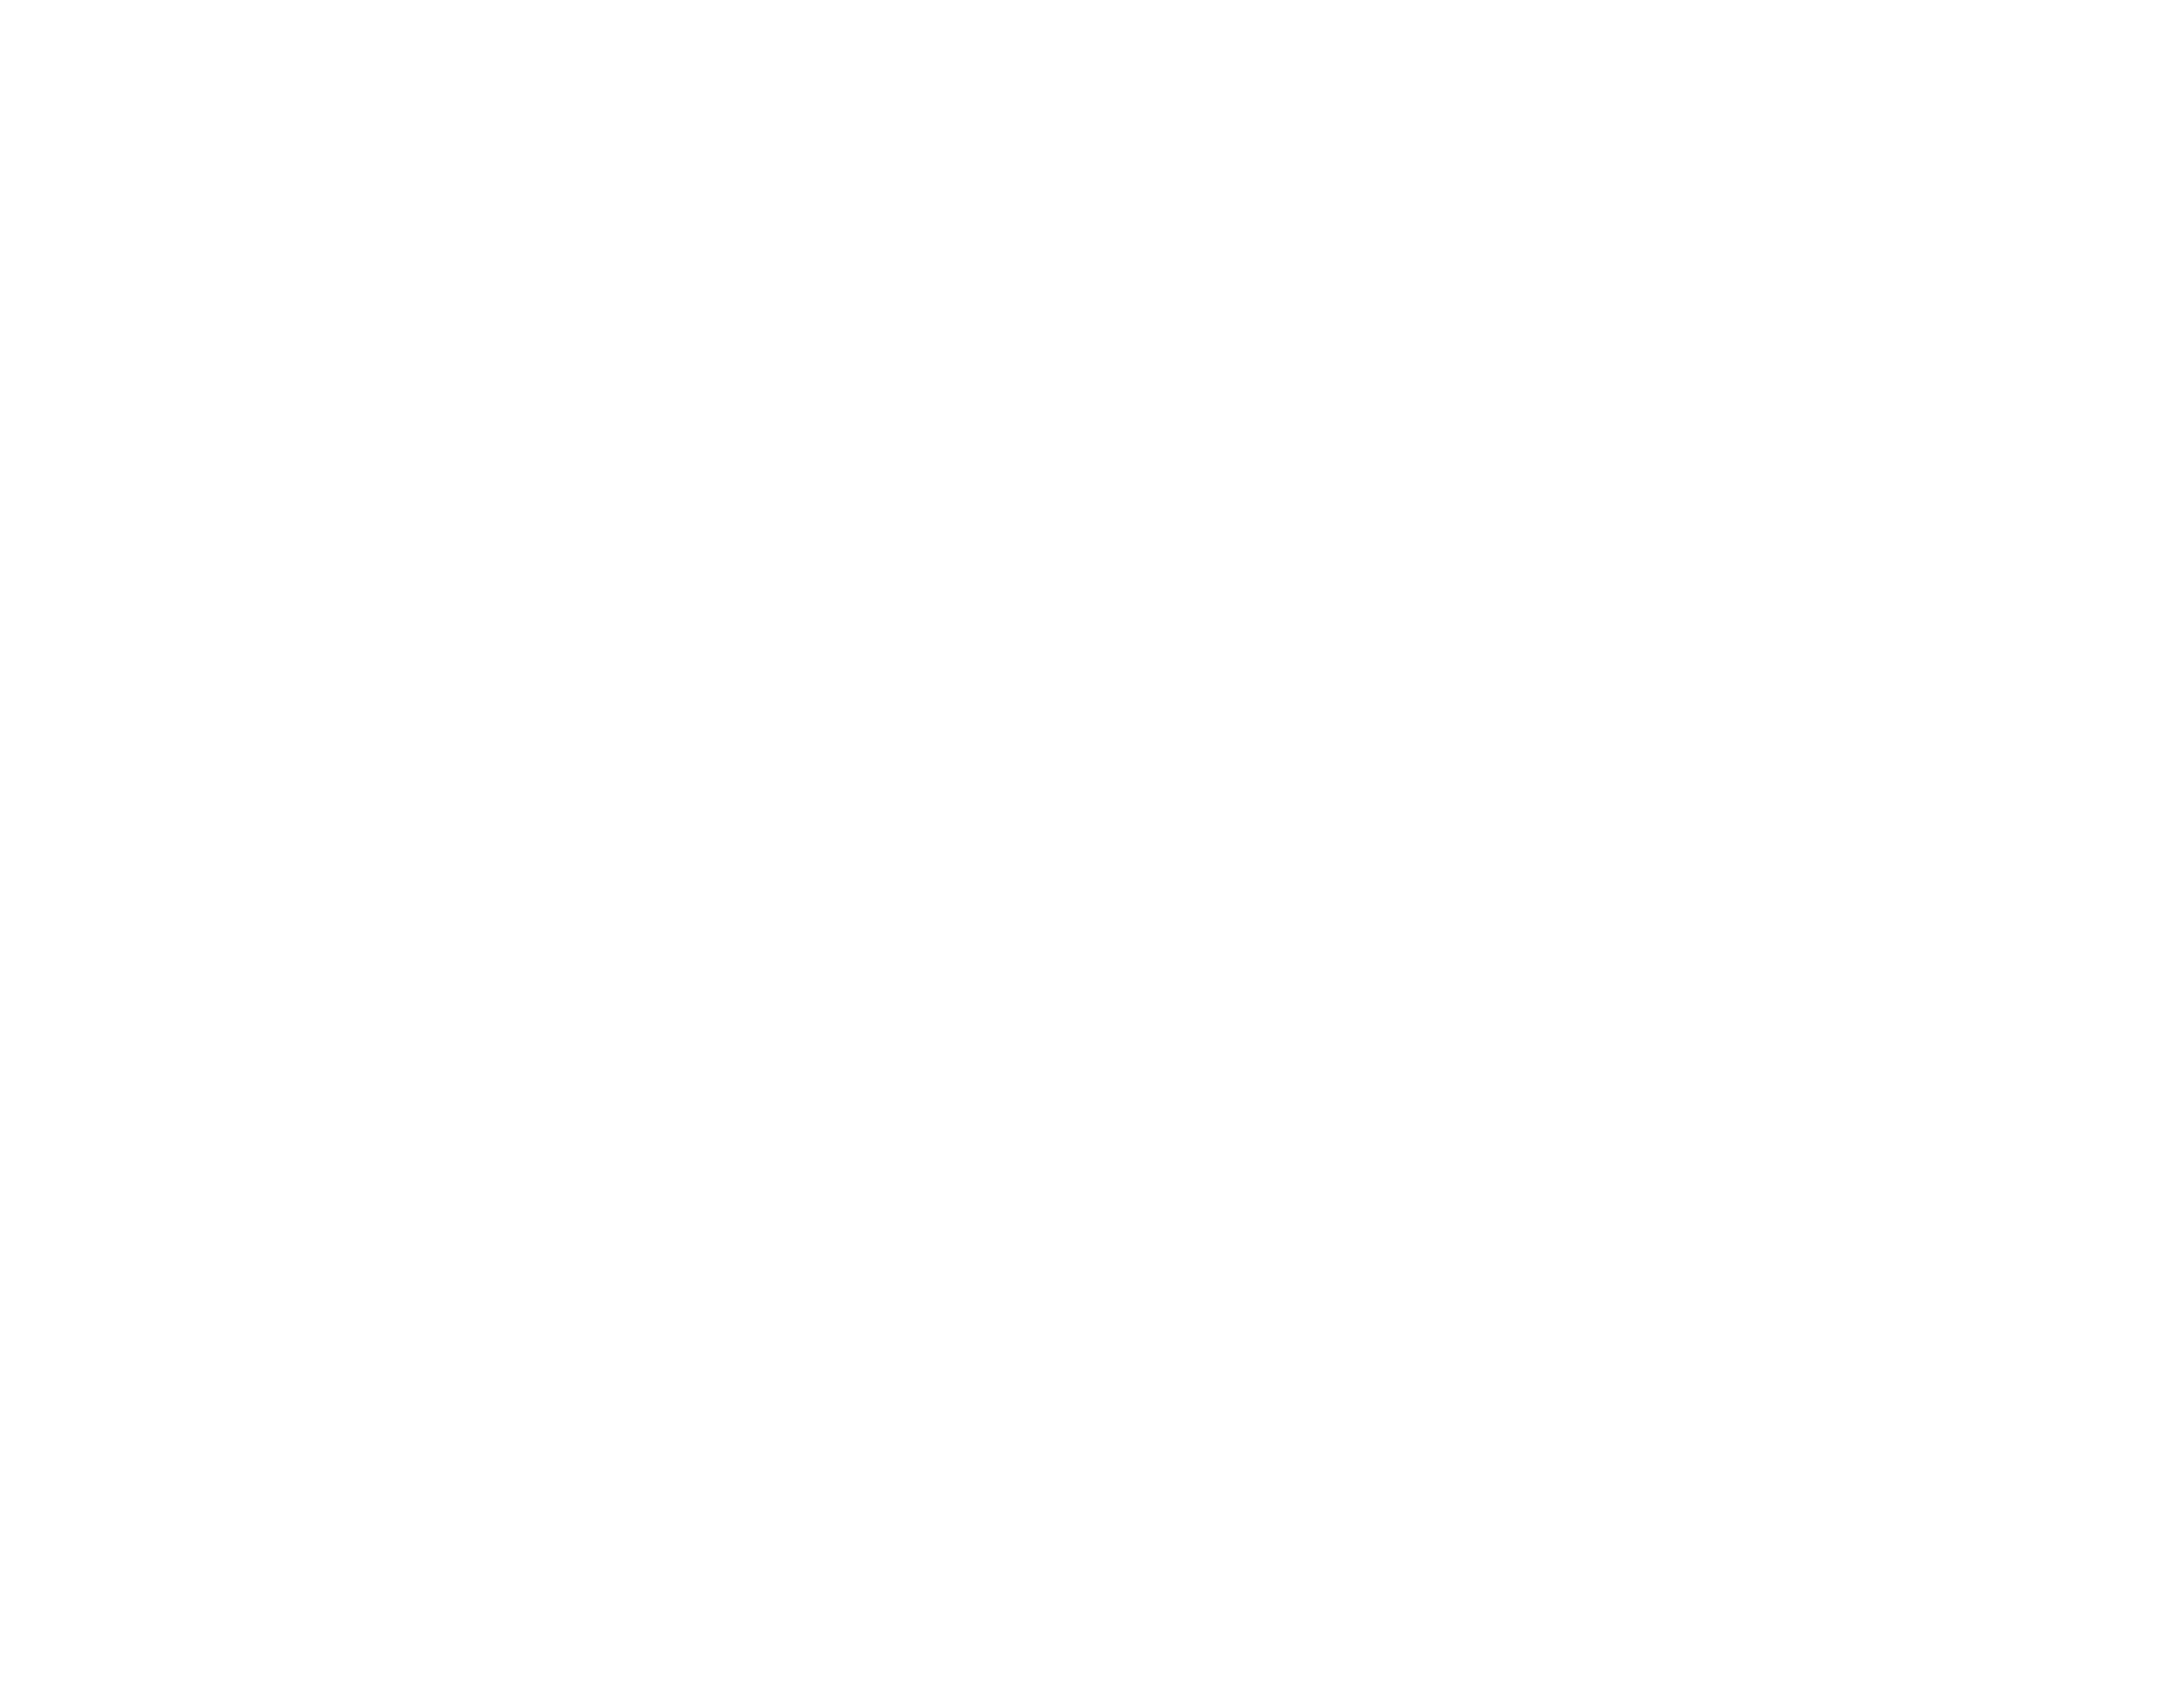 Cannes logo